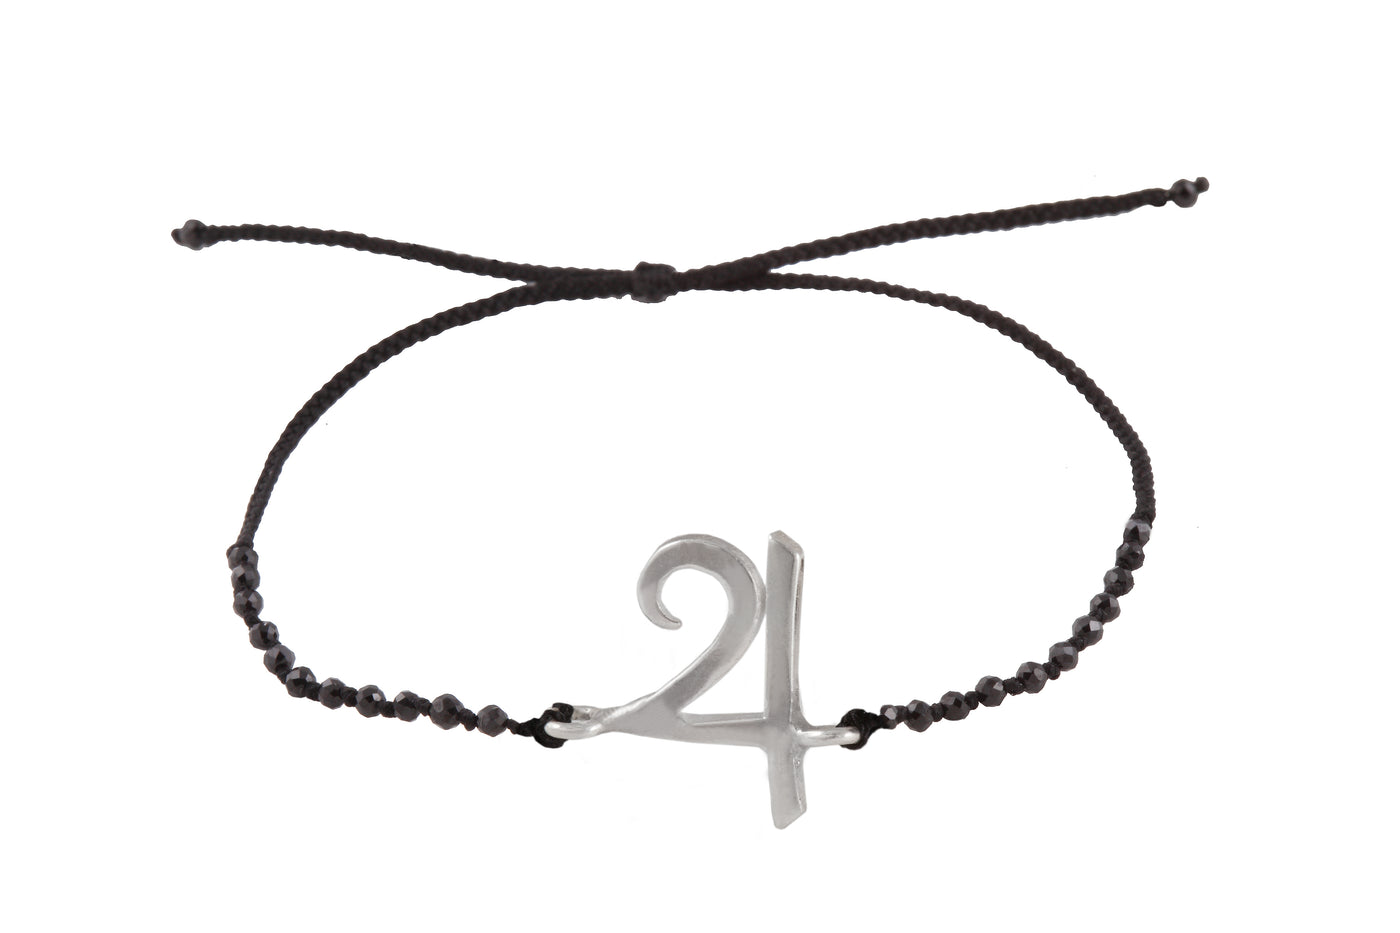 Jupiter amulet bracelet with beads. Silver